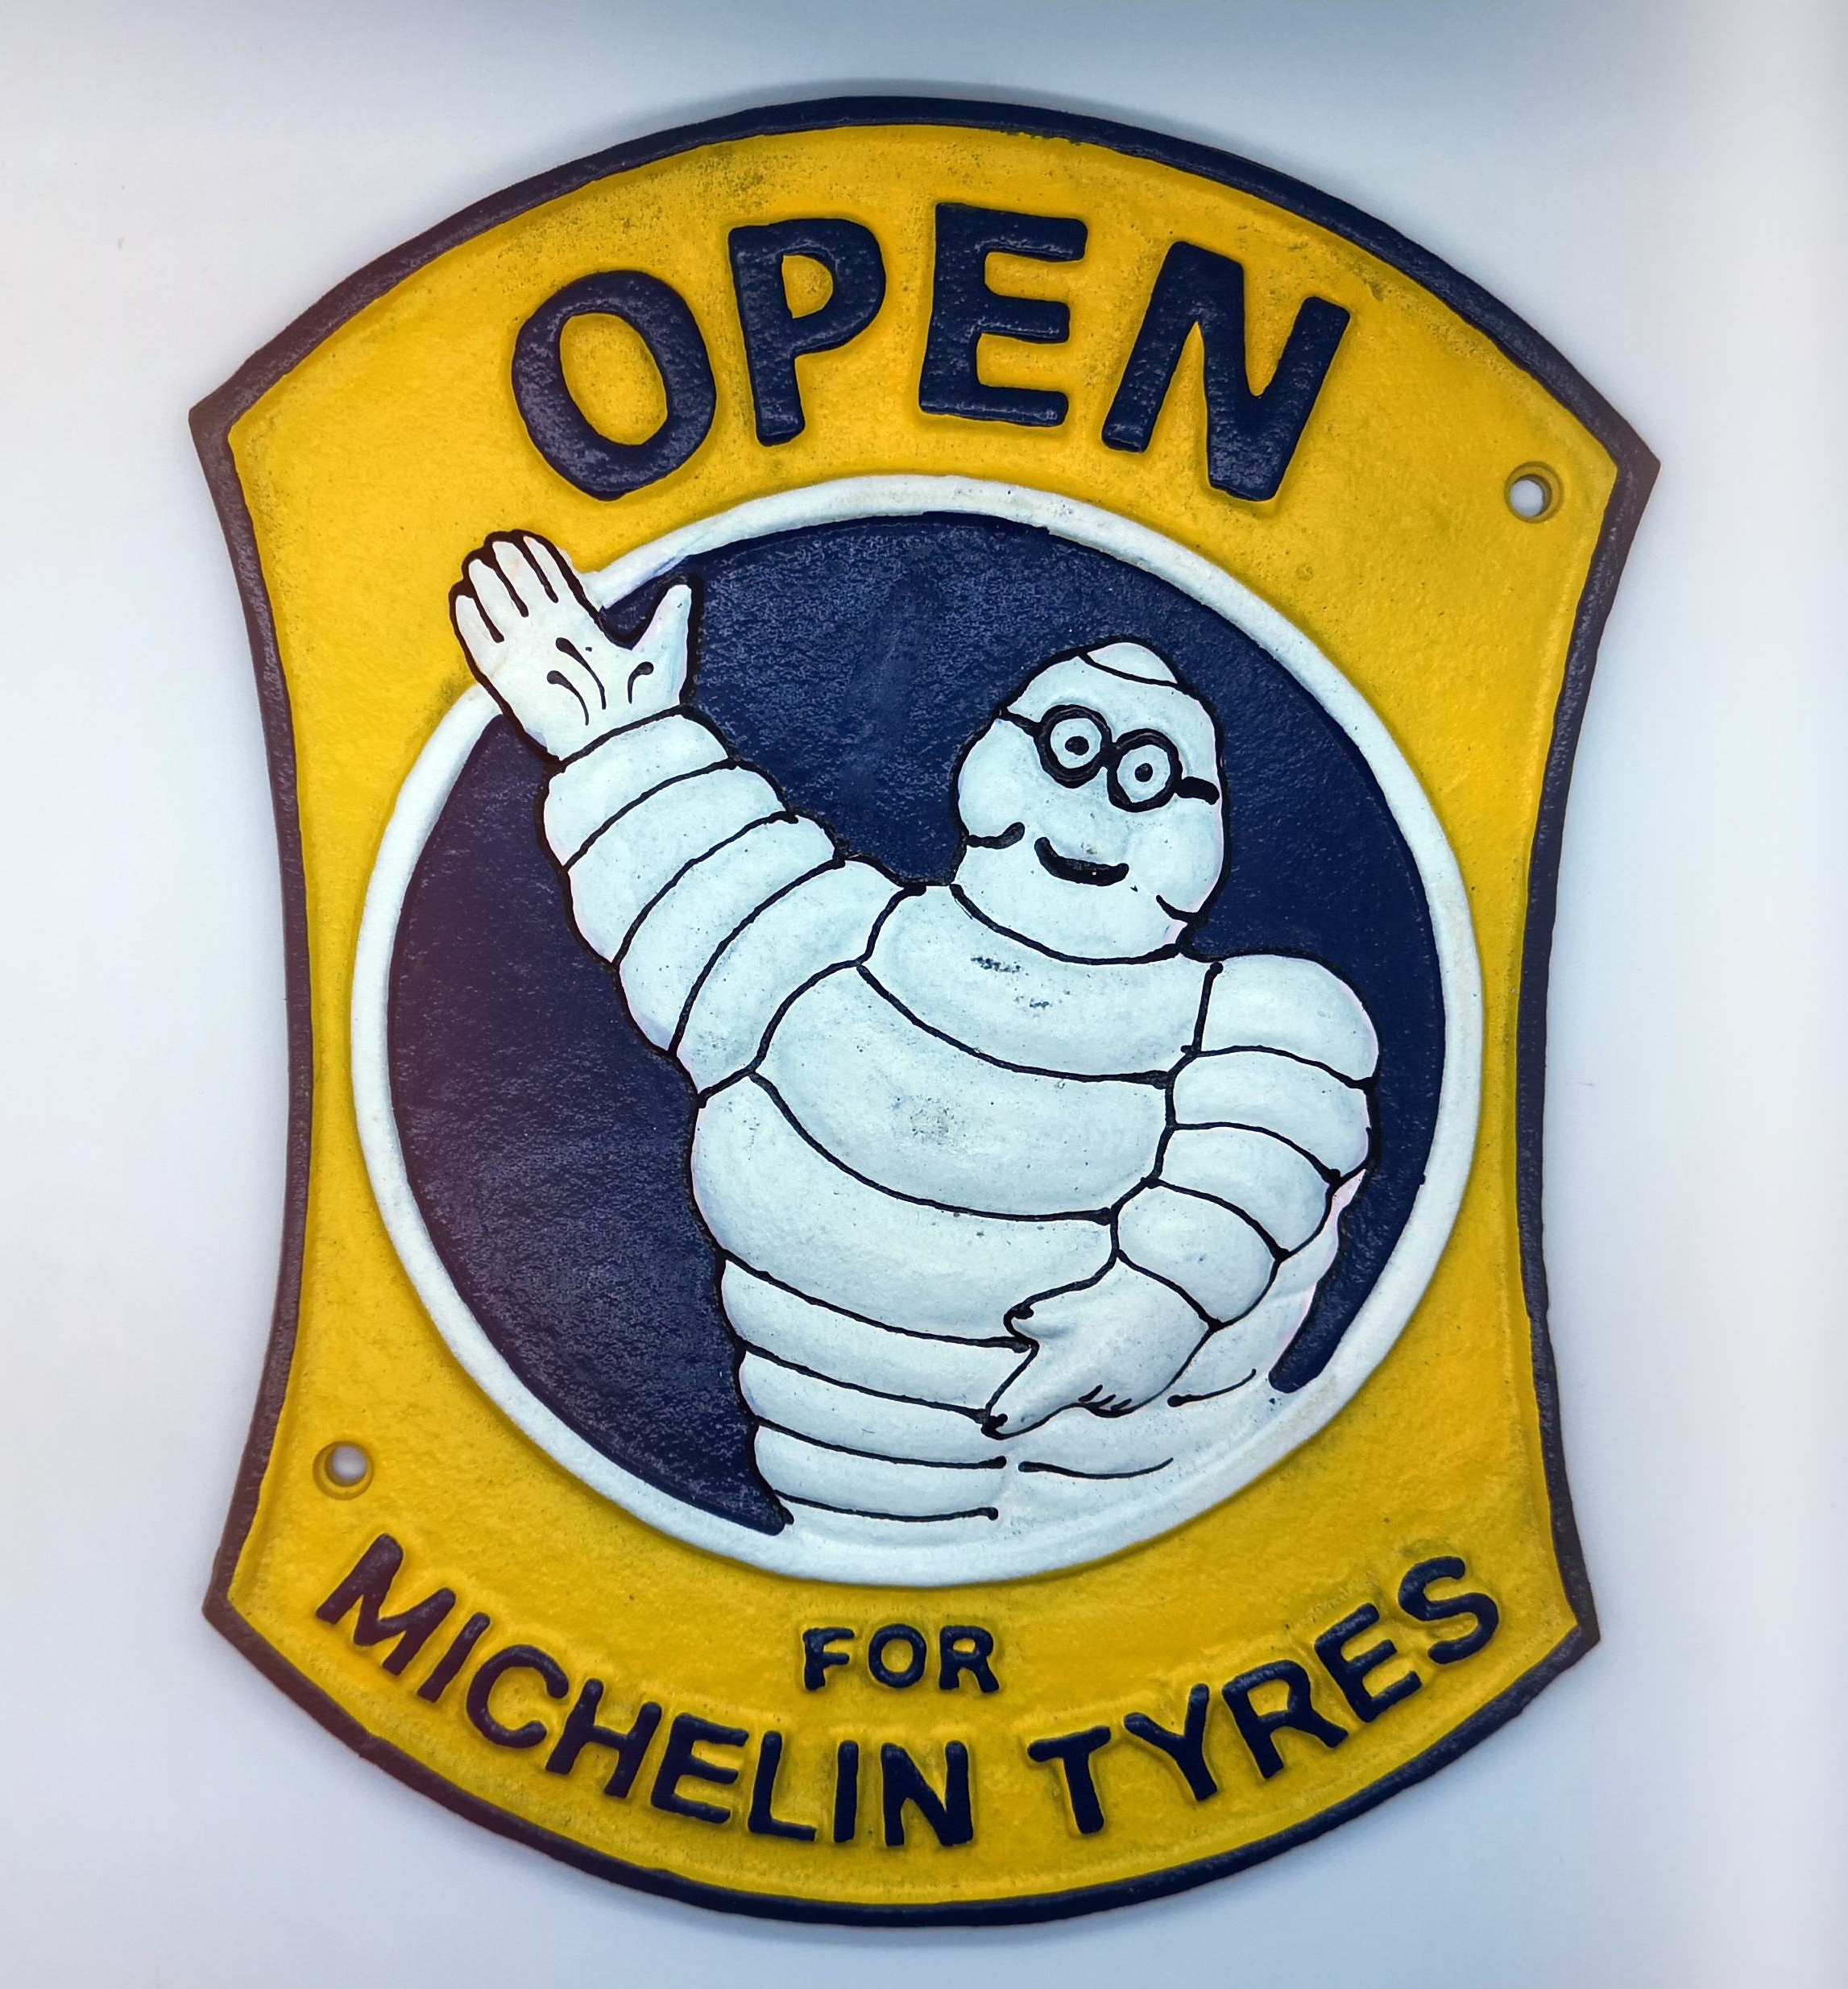 Michelin Man Bibendum Cast Iron OPEN MICHELIN TYRES Advertising Wall Plaque Sign